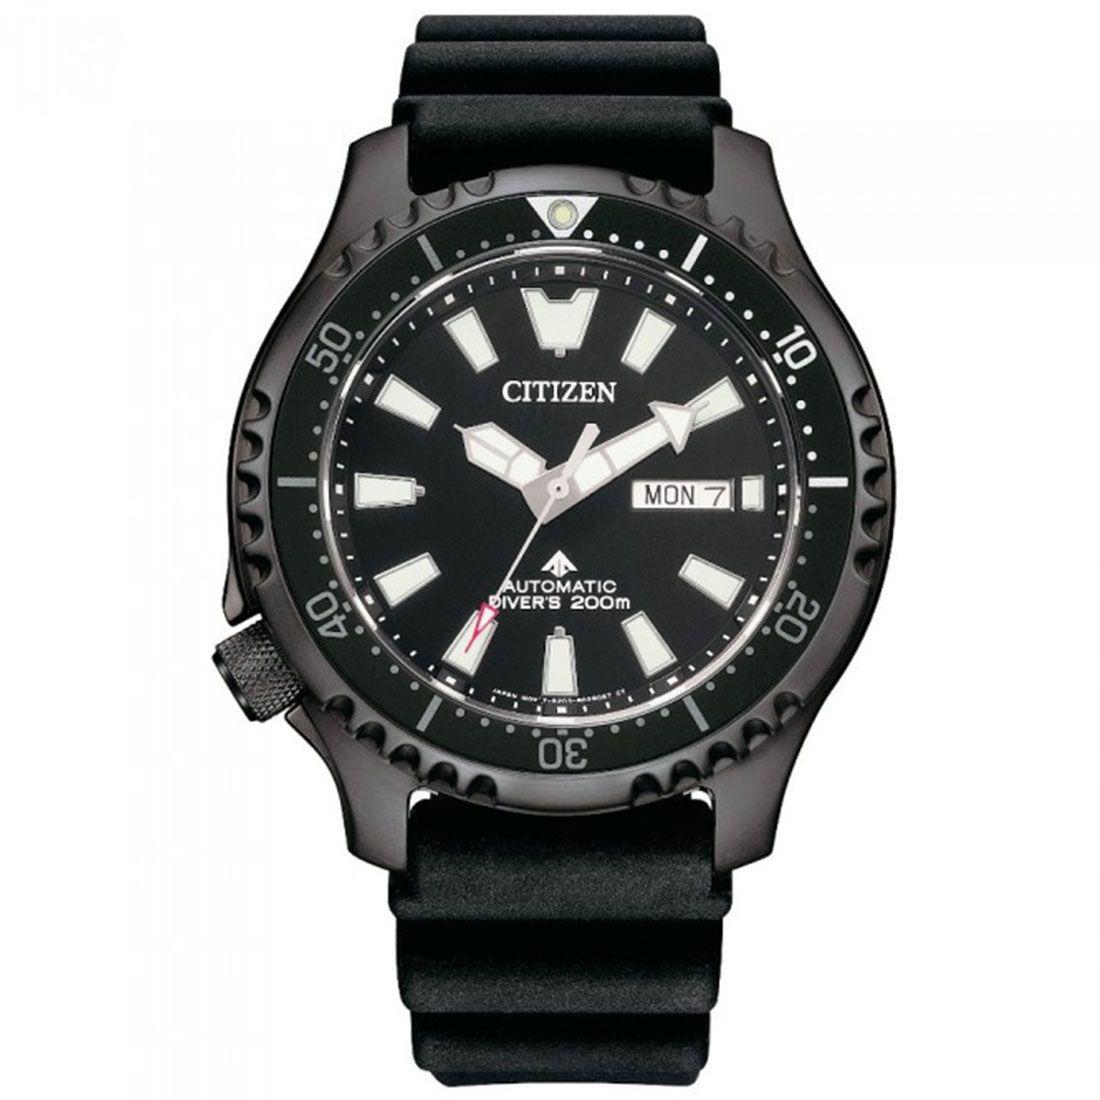 Citizen Promaster Fugu Asia Limited Divers Rubber Band Watch NY0139-11E -Citizen